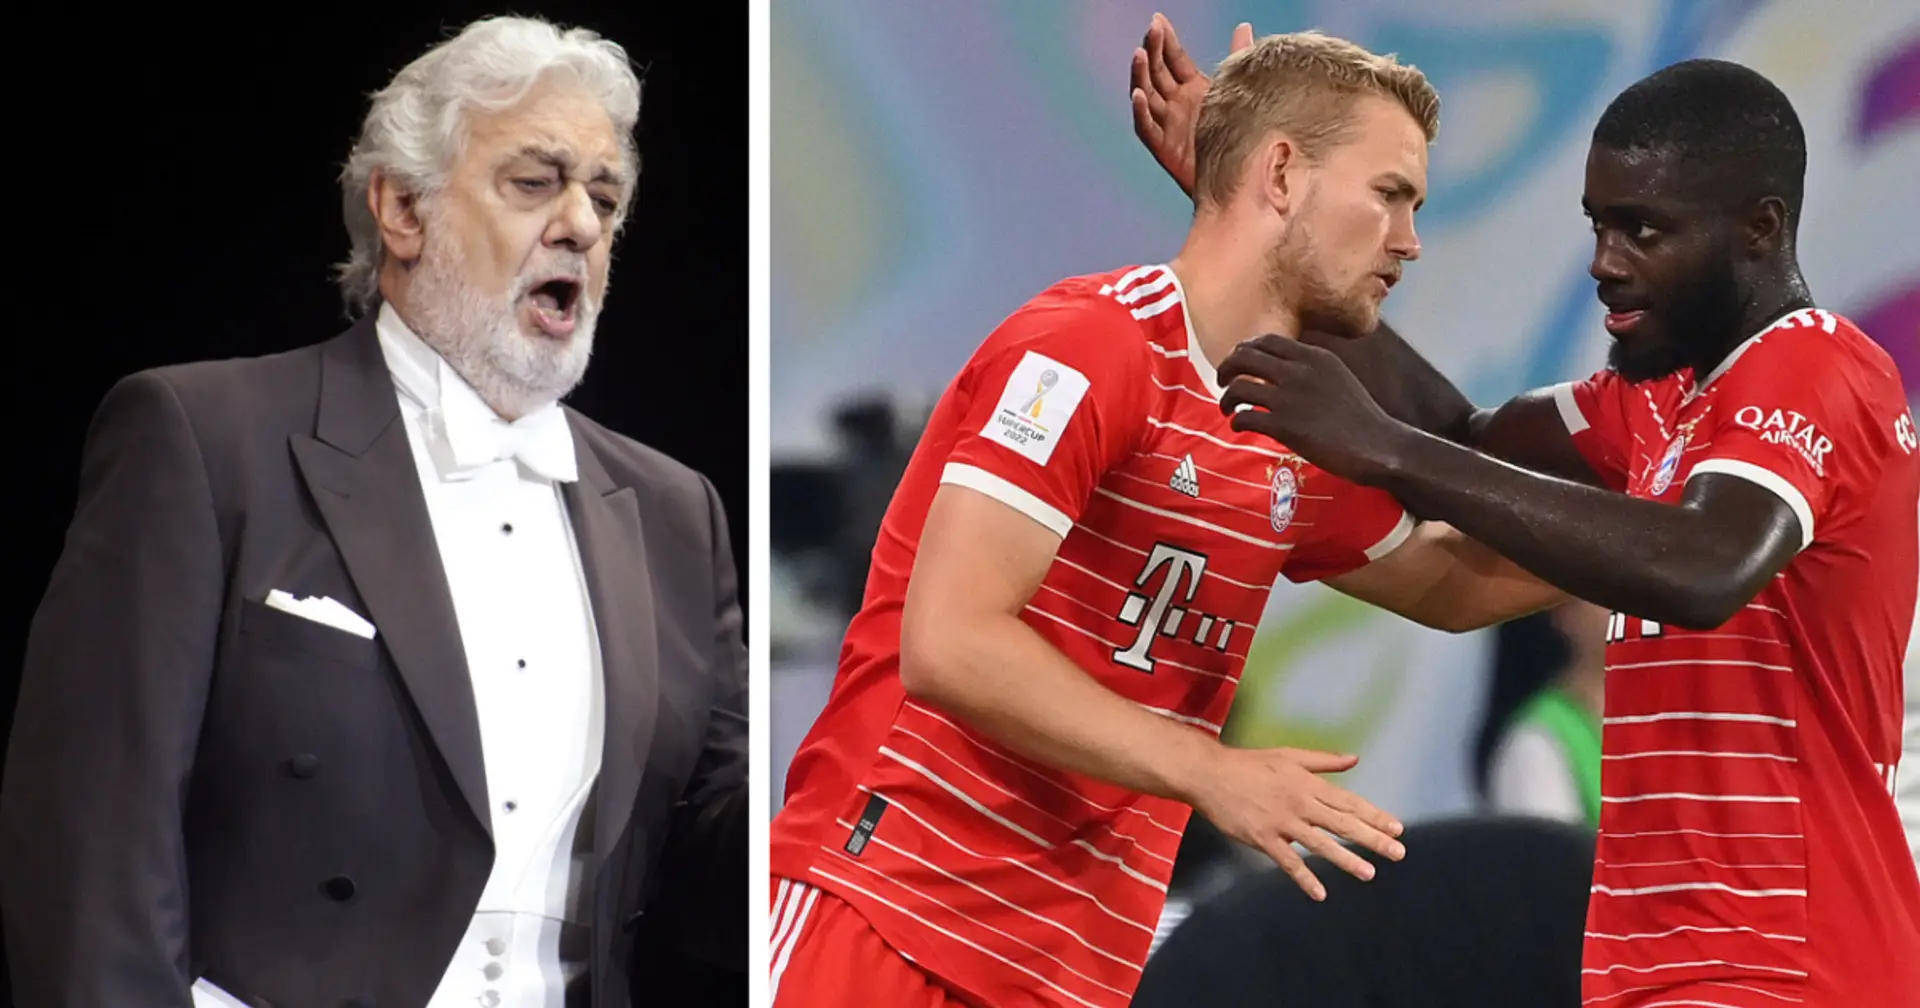 Opera singer coaching Bayern star for on-pitch improvement